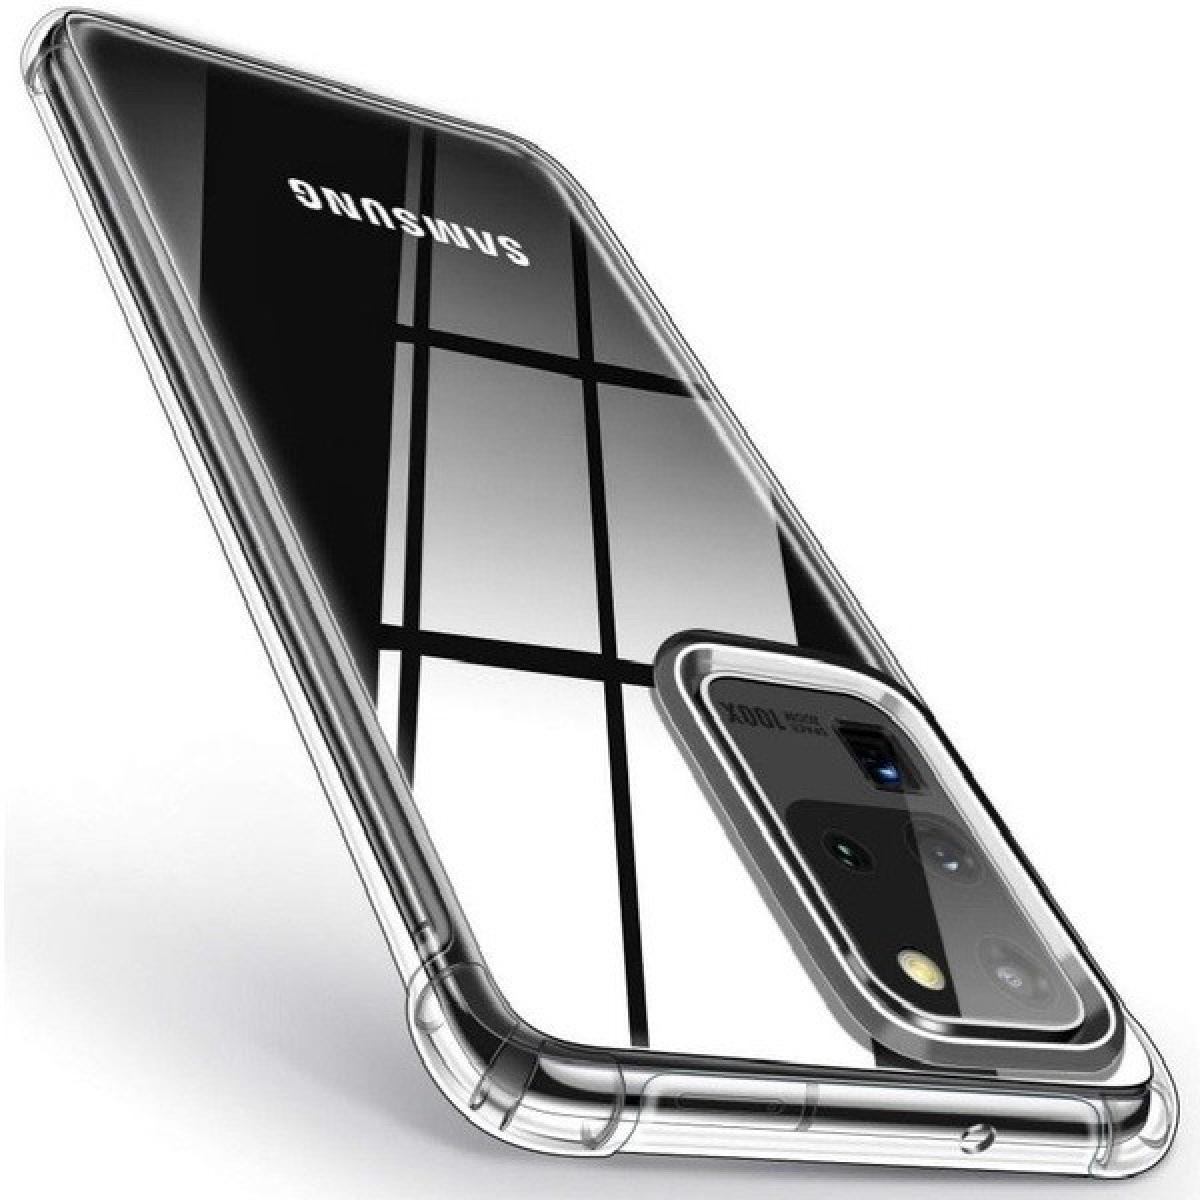 Shot - Coque Silicone Anti-Chocs pour "SAMSUNG Galaxy S20 Ultra" Transparente Protection Gel Souple (NOIR) - Coque, étui smartphone